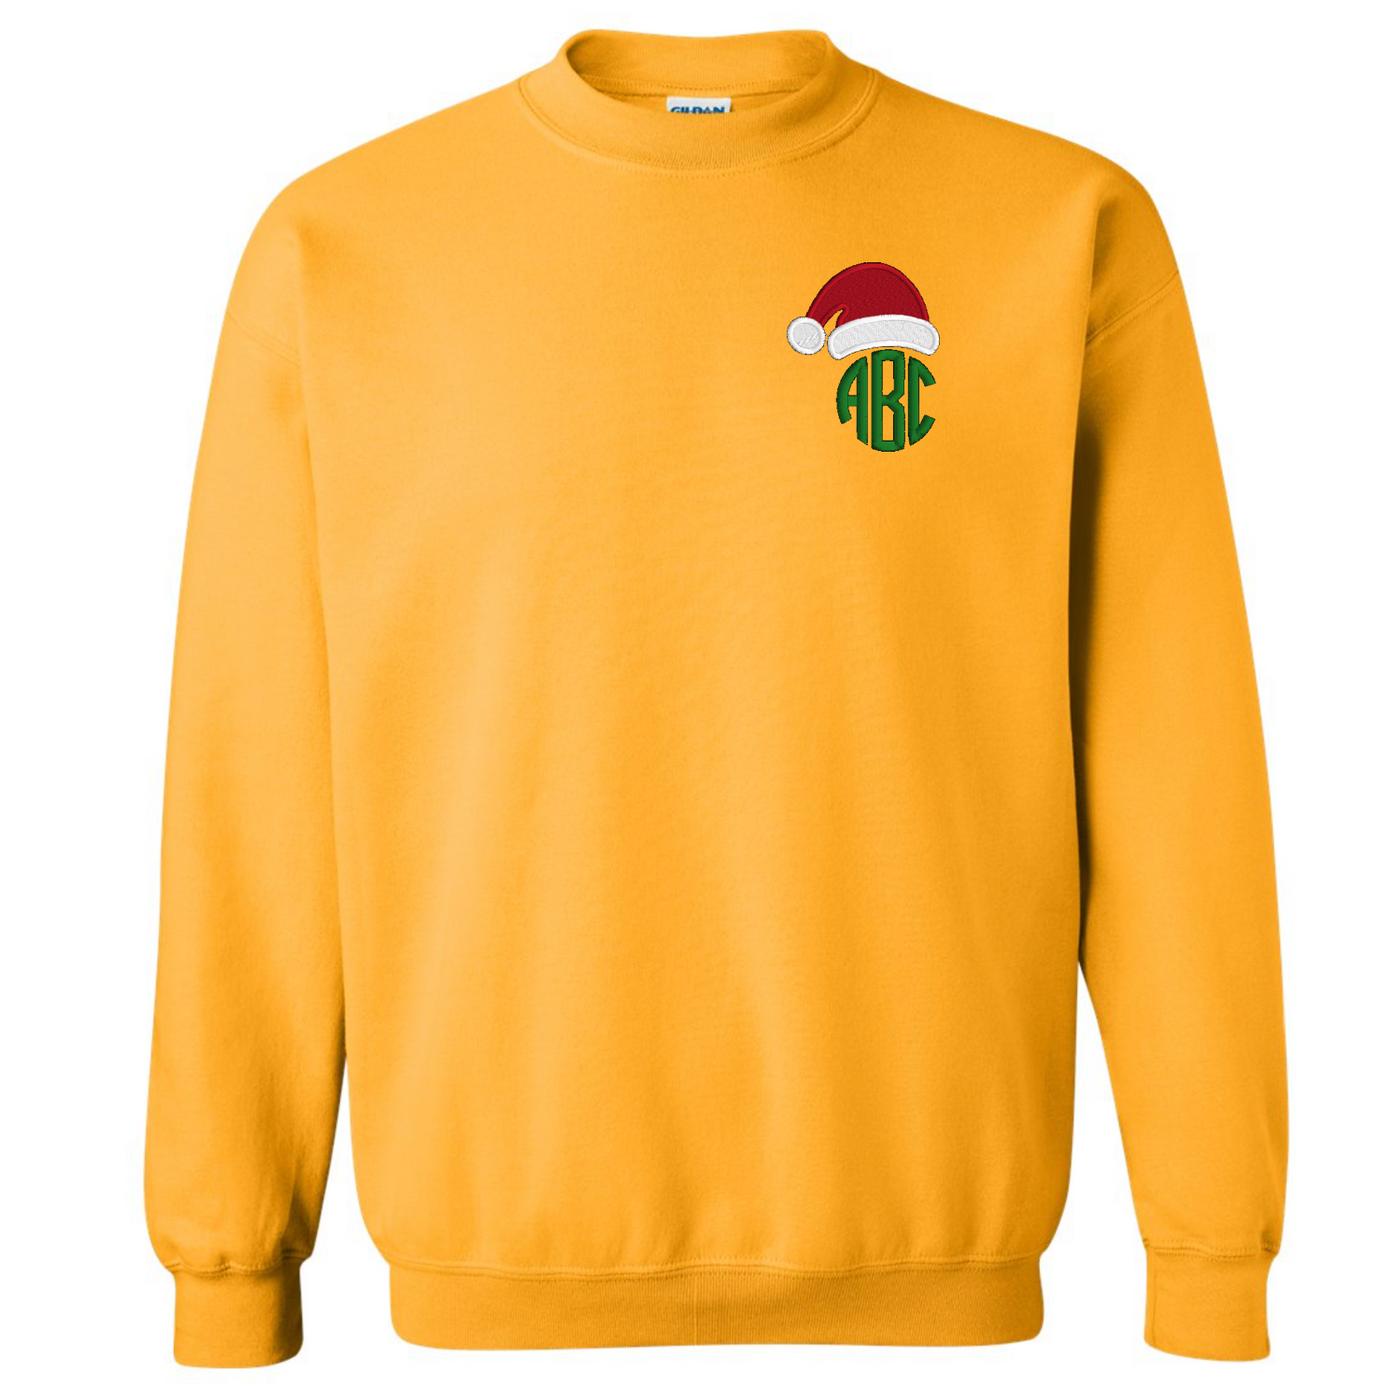 Monogrammed Santa Hat Crewneck Sweatshirt